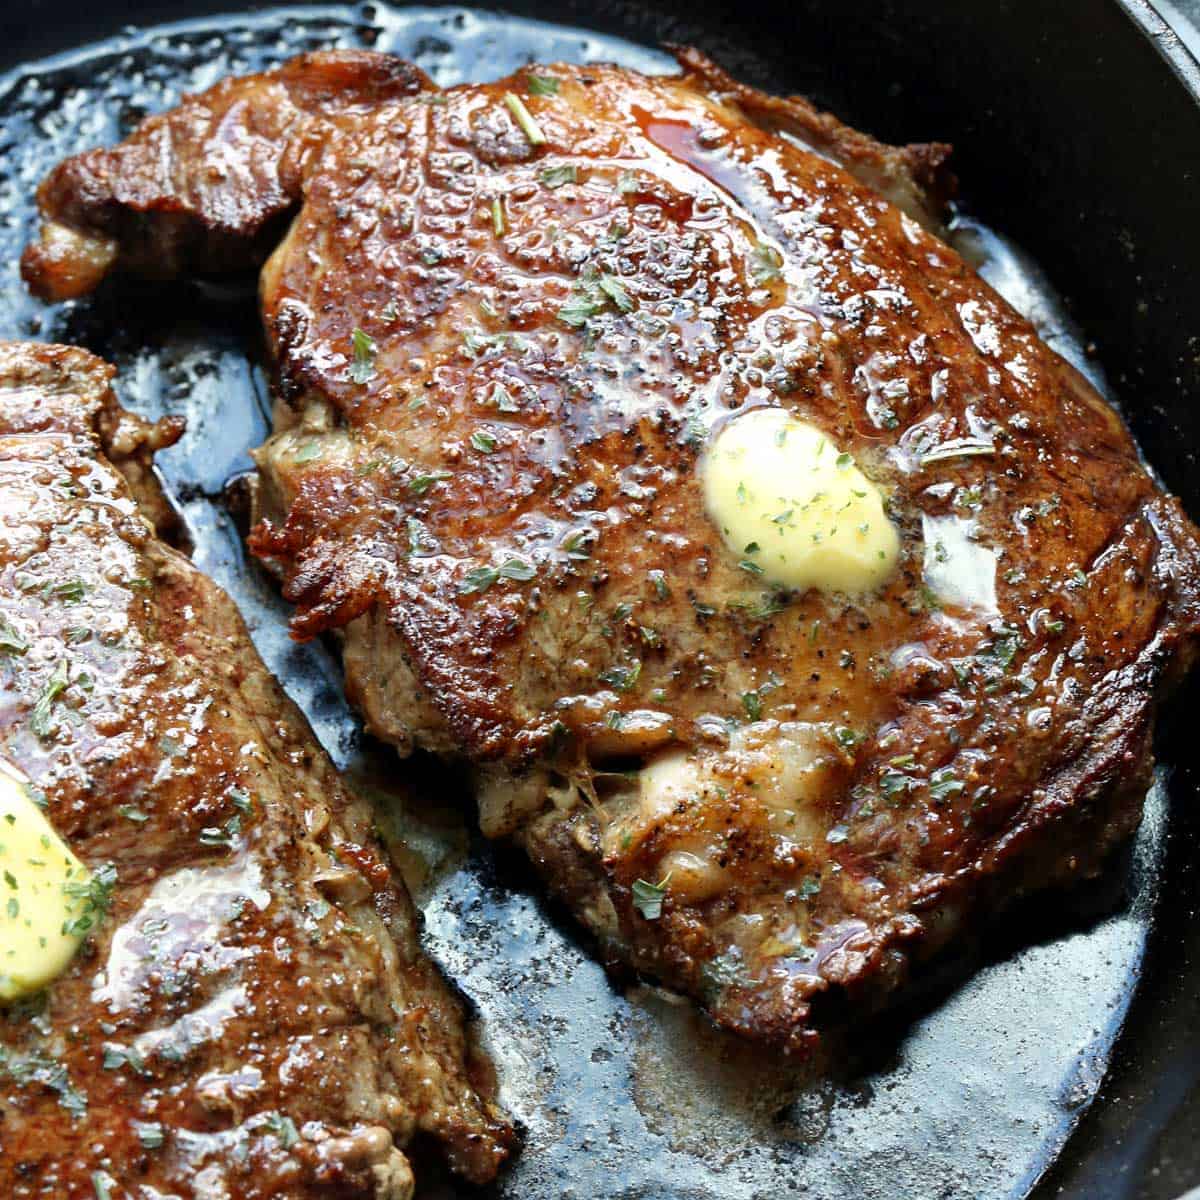 https://healthyrecipesblogs.com/wp-content/uploads/2022/09/ribeye-steak-featured.jpg